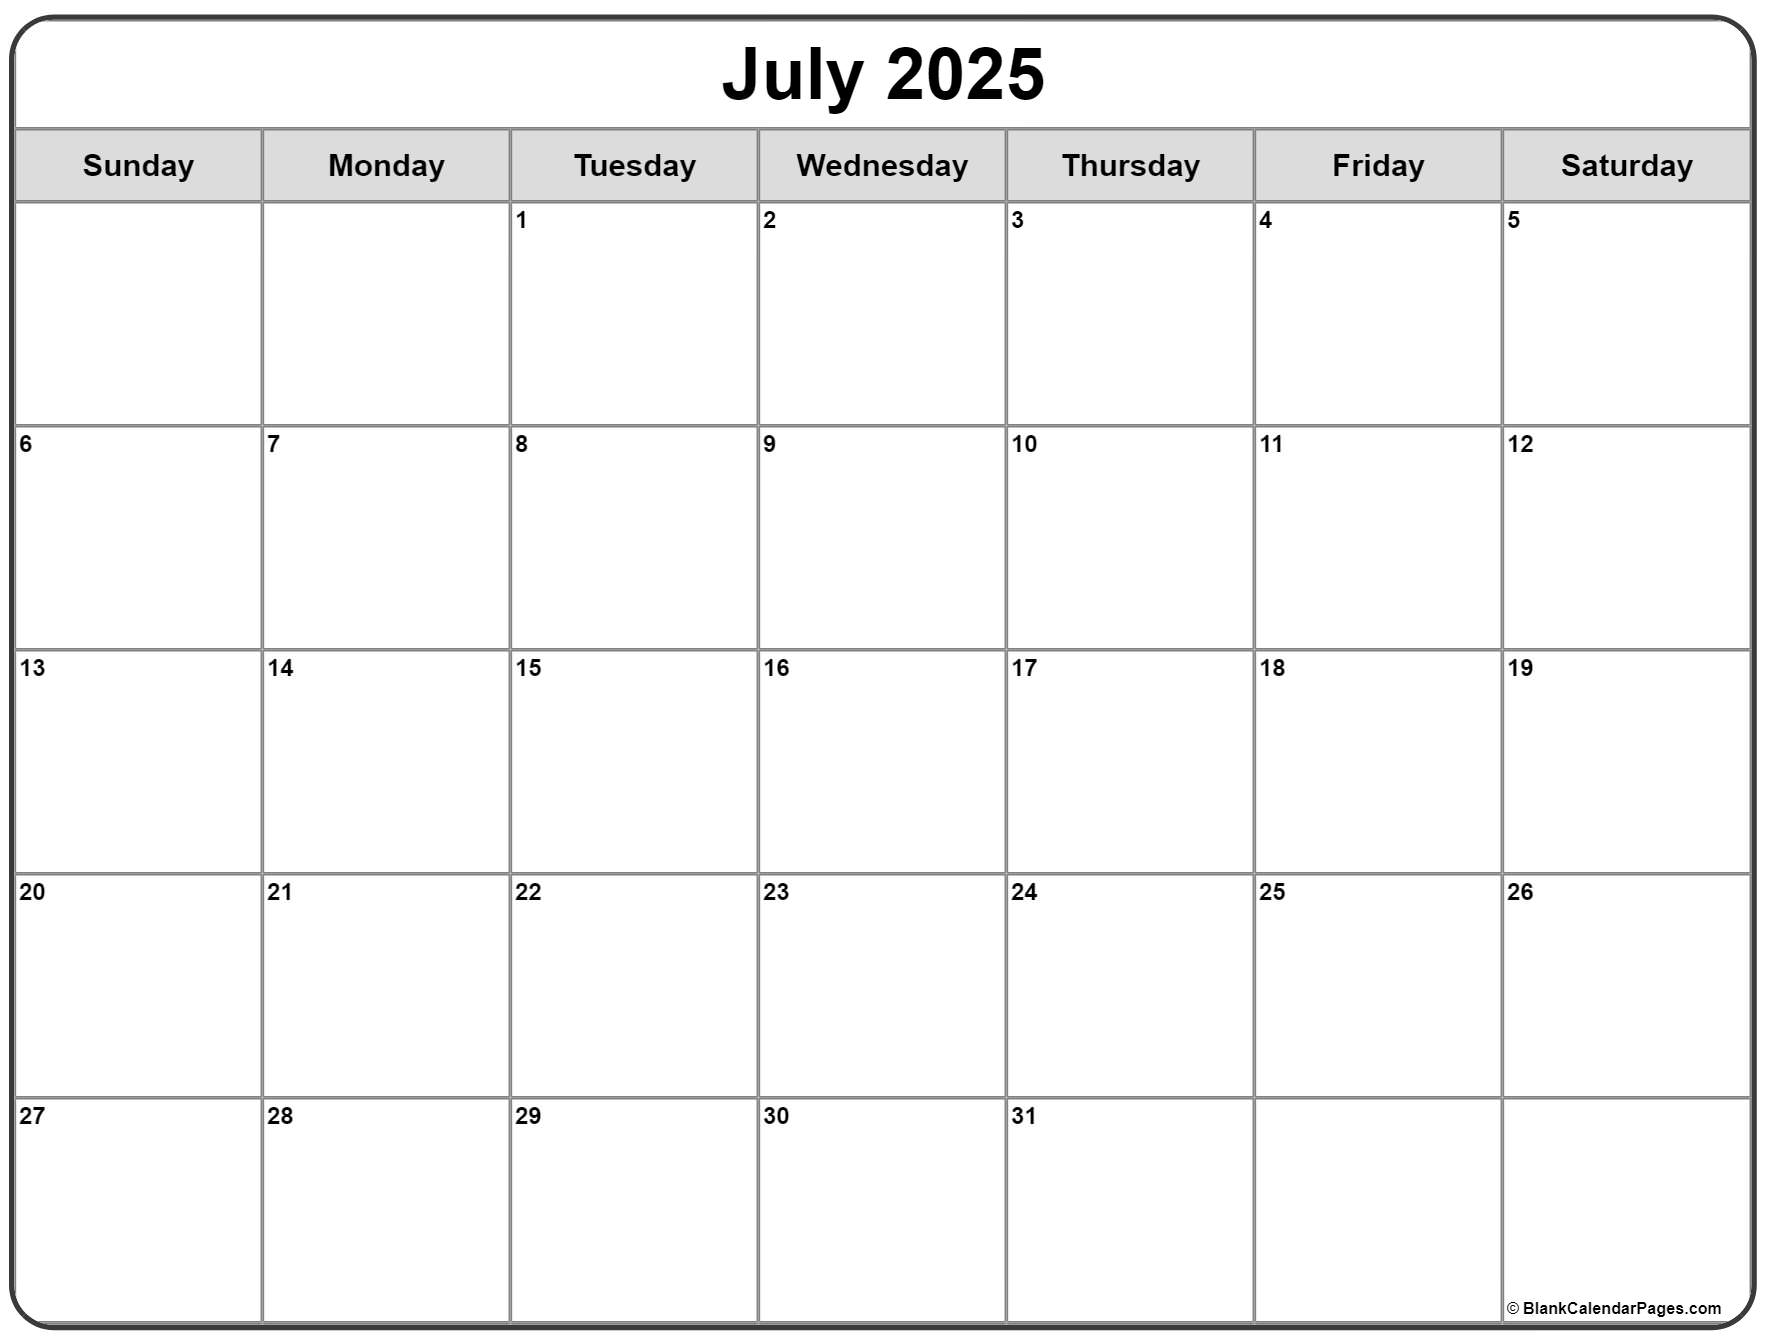 july-2025-make-a-calendar